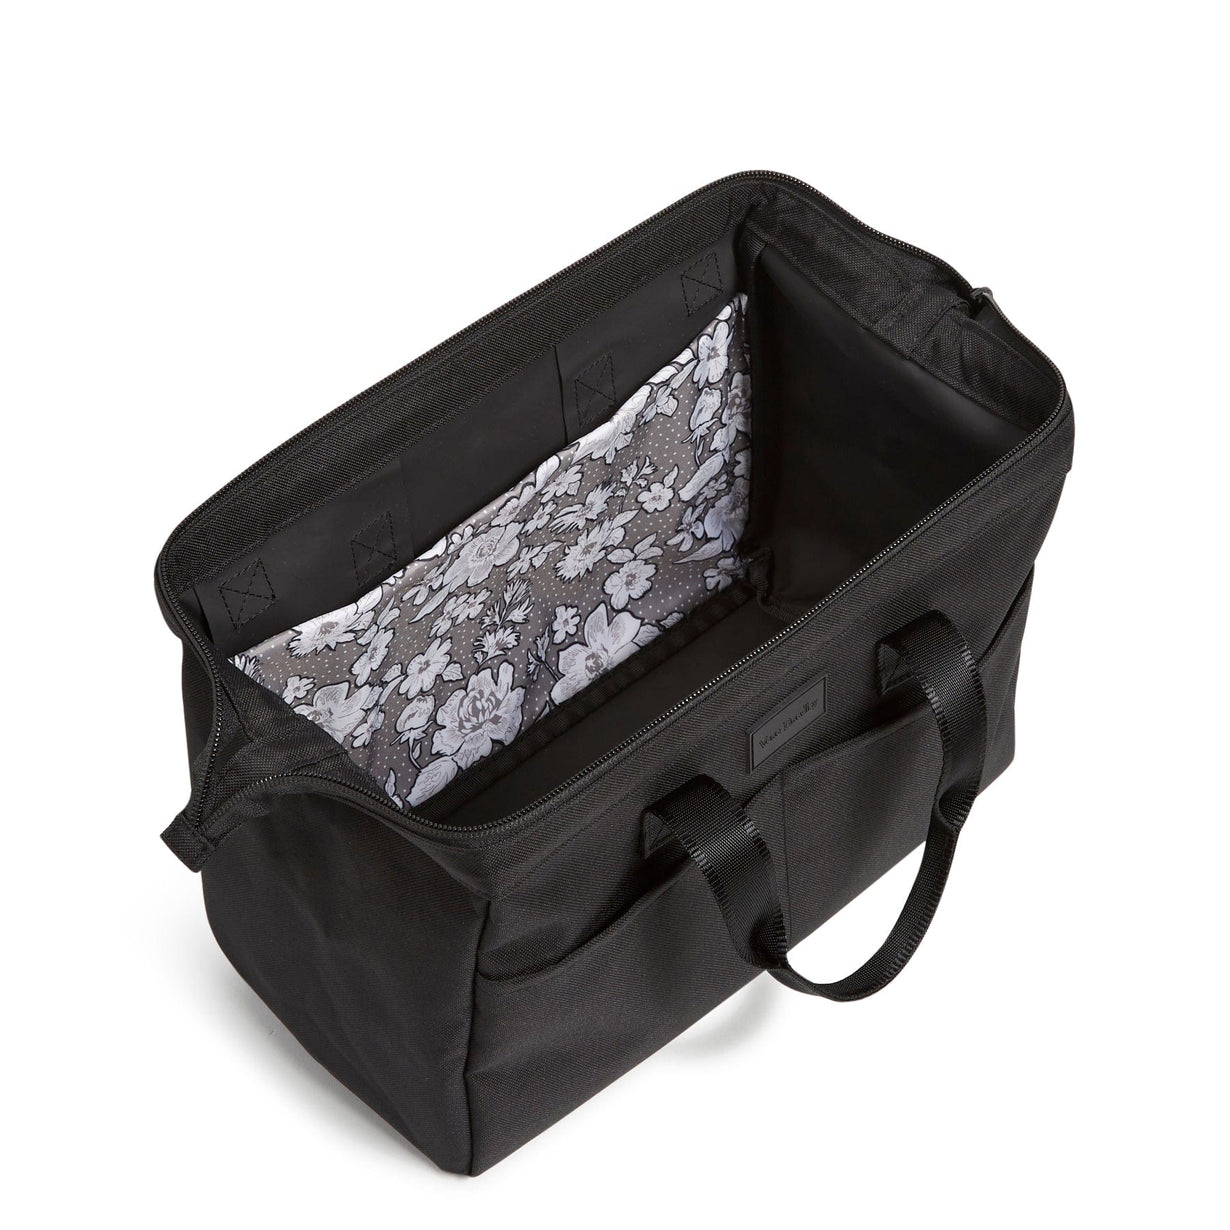 Purse Organizer Insert for Handbags Bag Organizers Inside Tote Pocketbook  Women | eBay